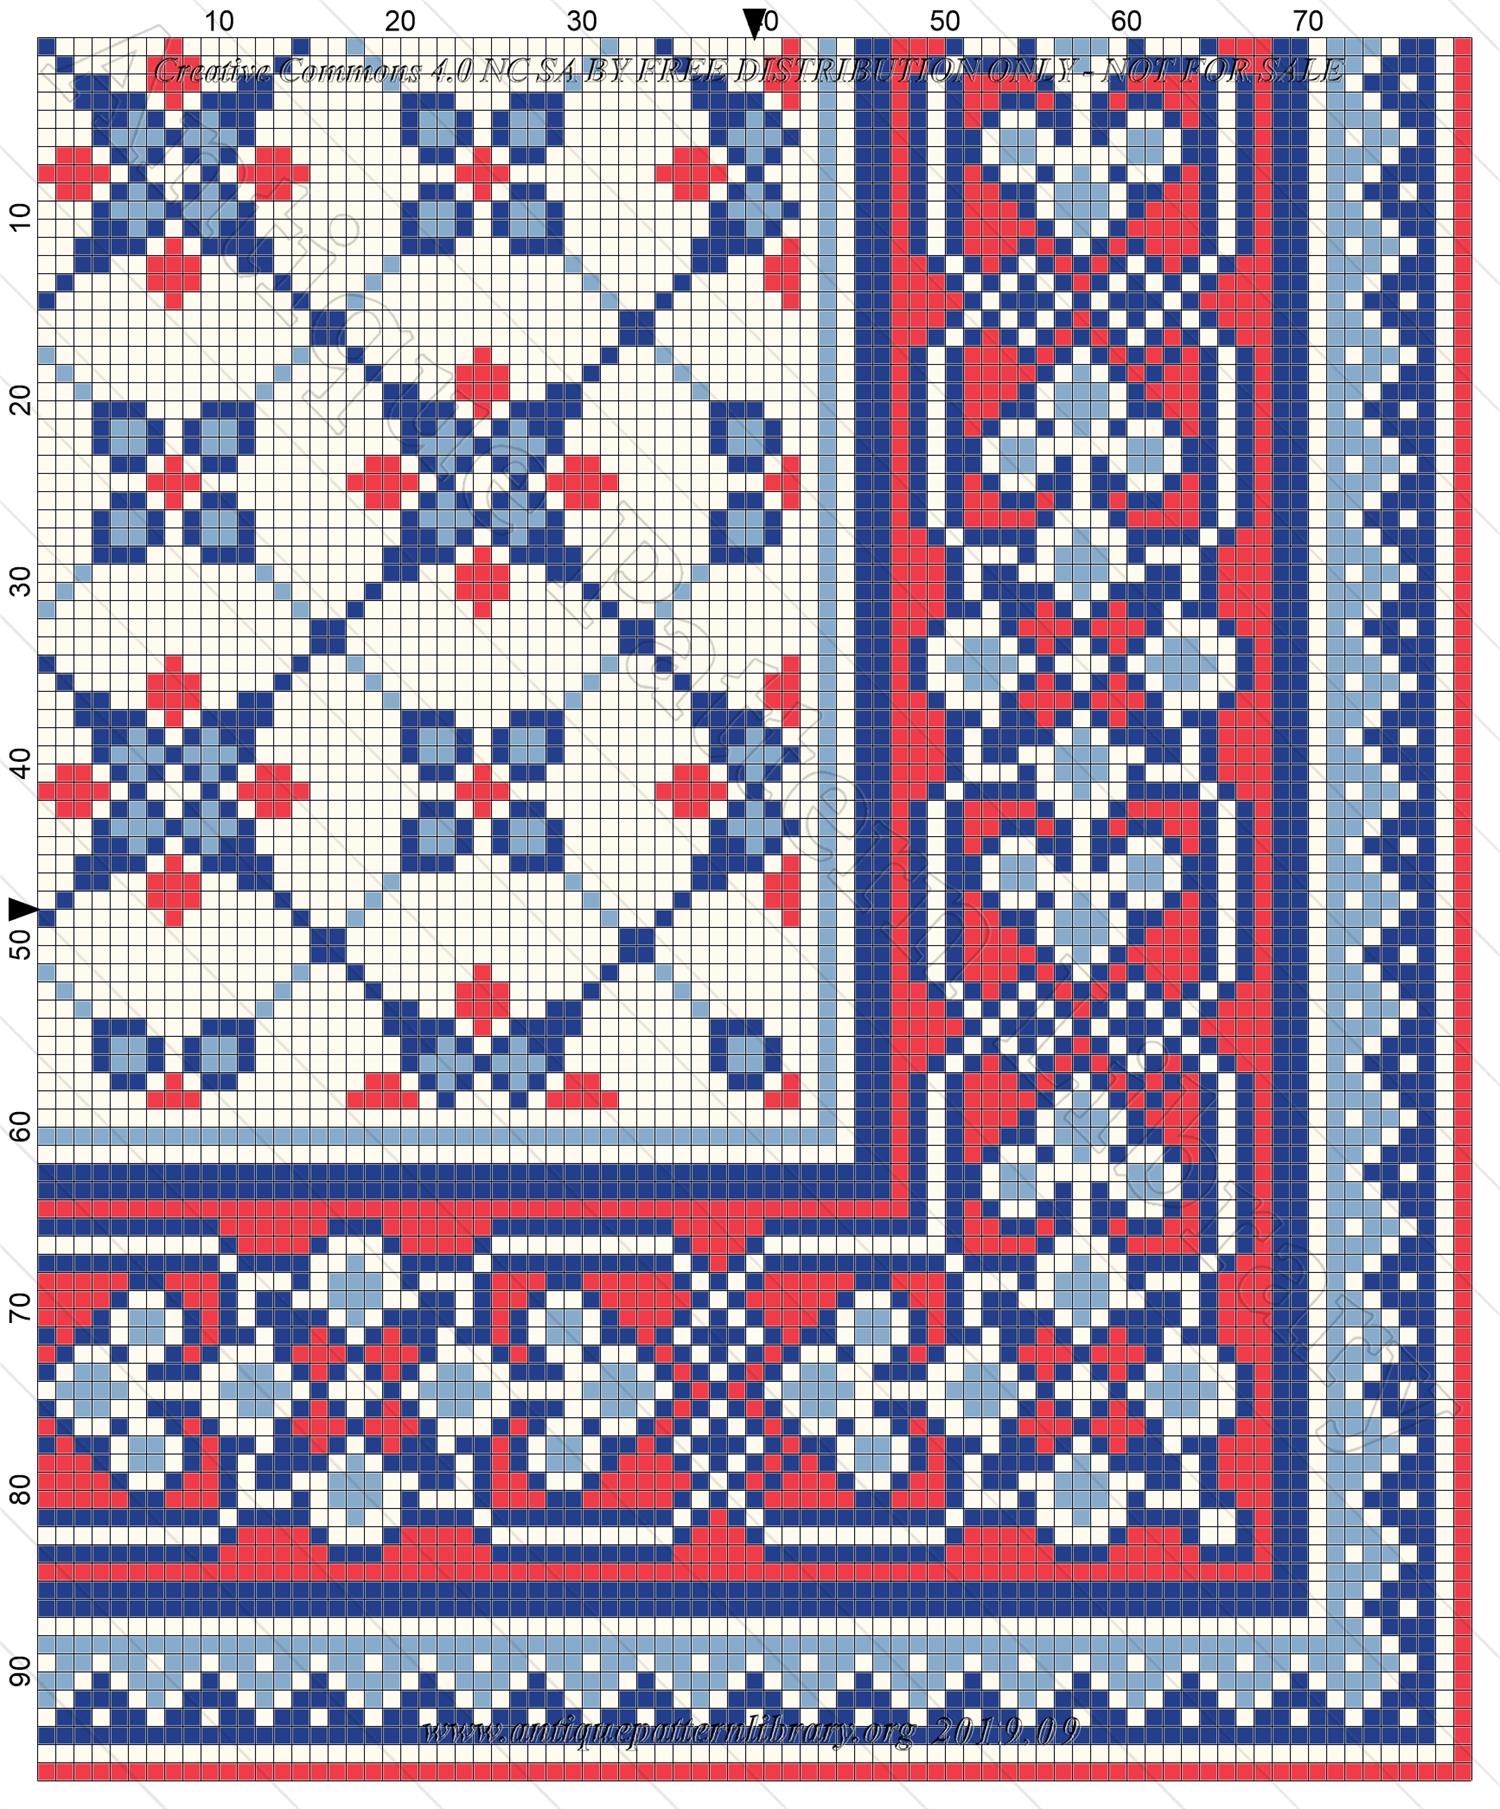 C-YS691 Quarter pattern rug design